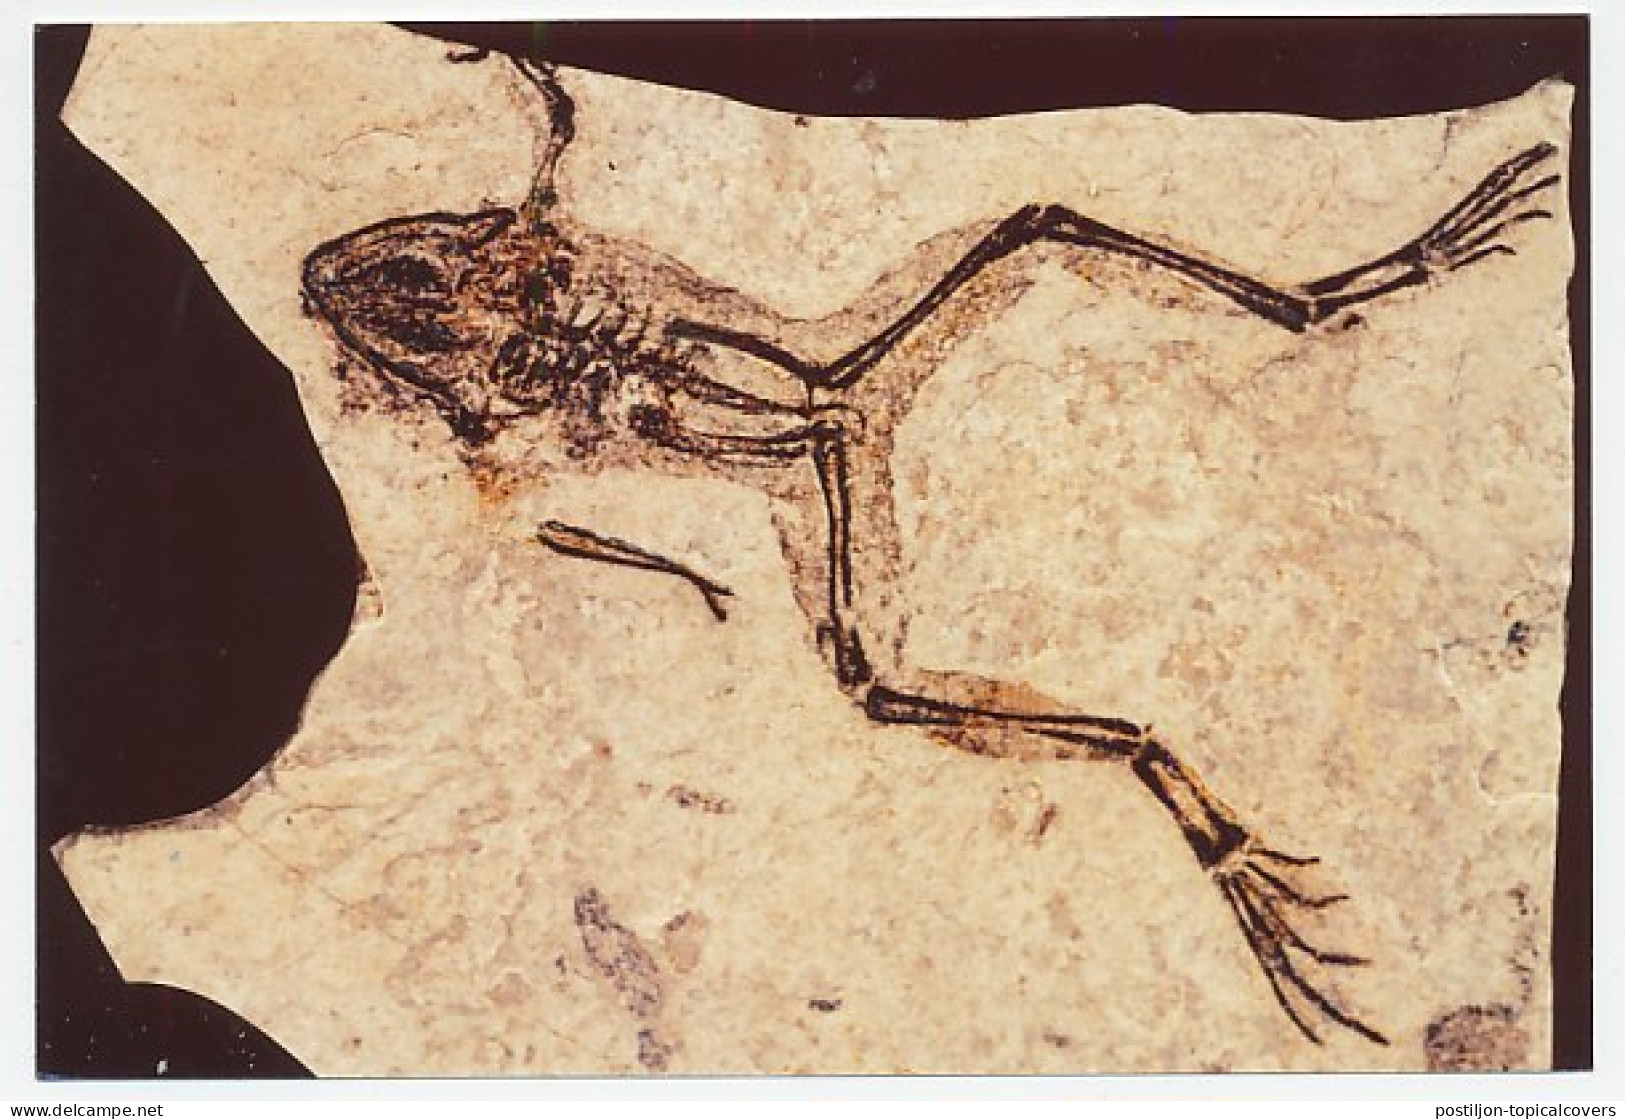 Postal Stationery China 2006 Fossil - Frog - Prehistory